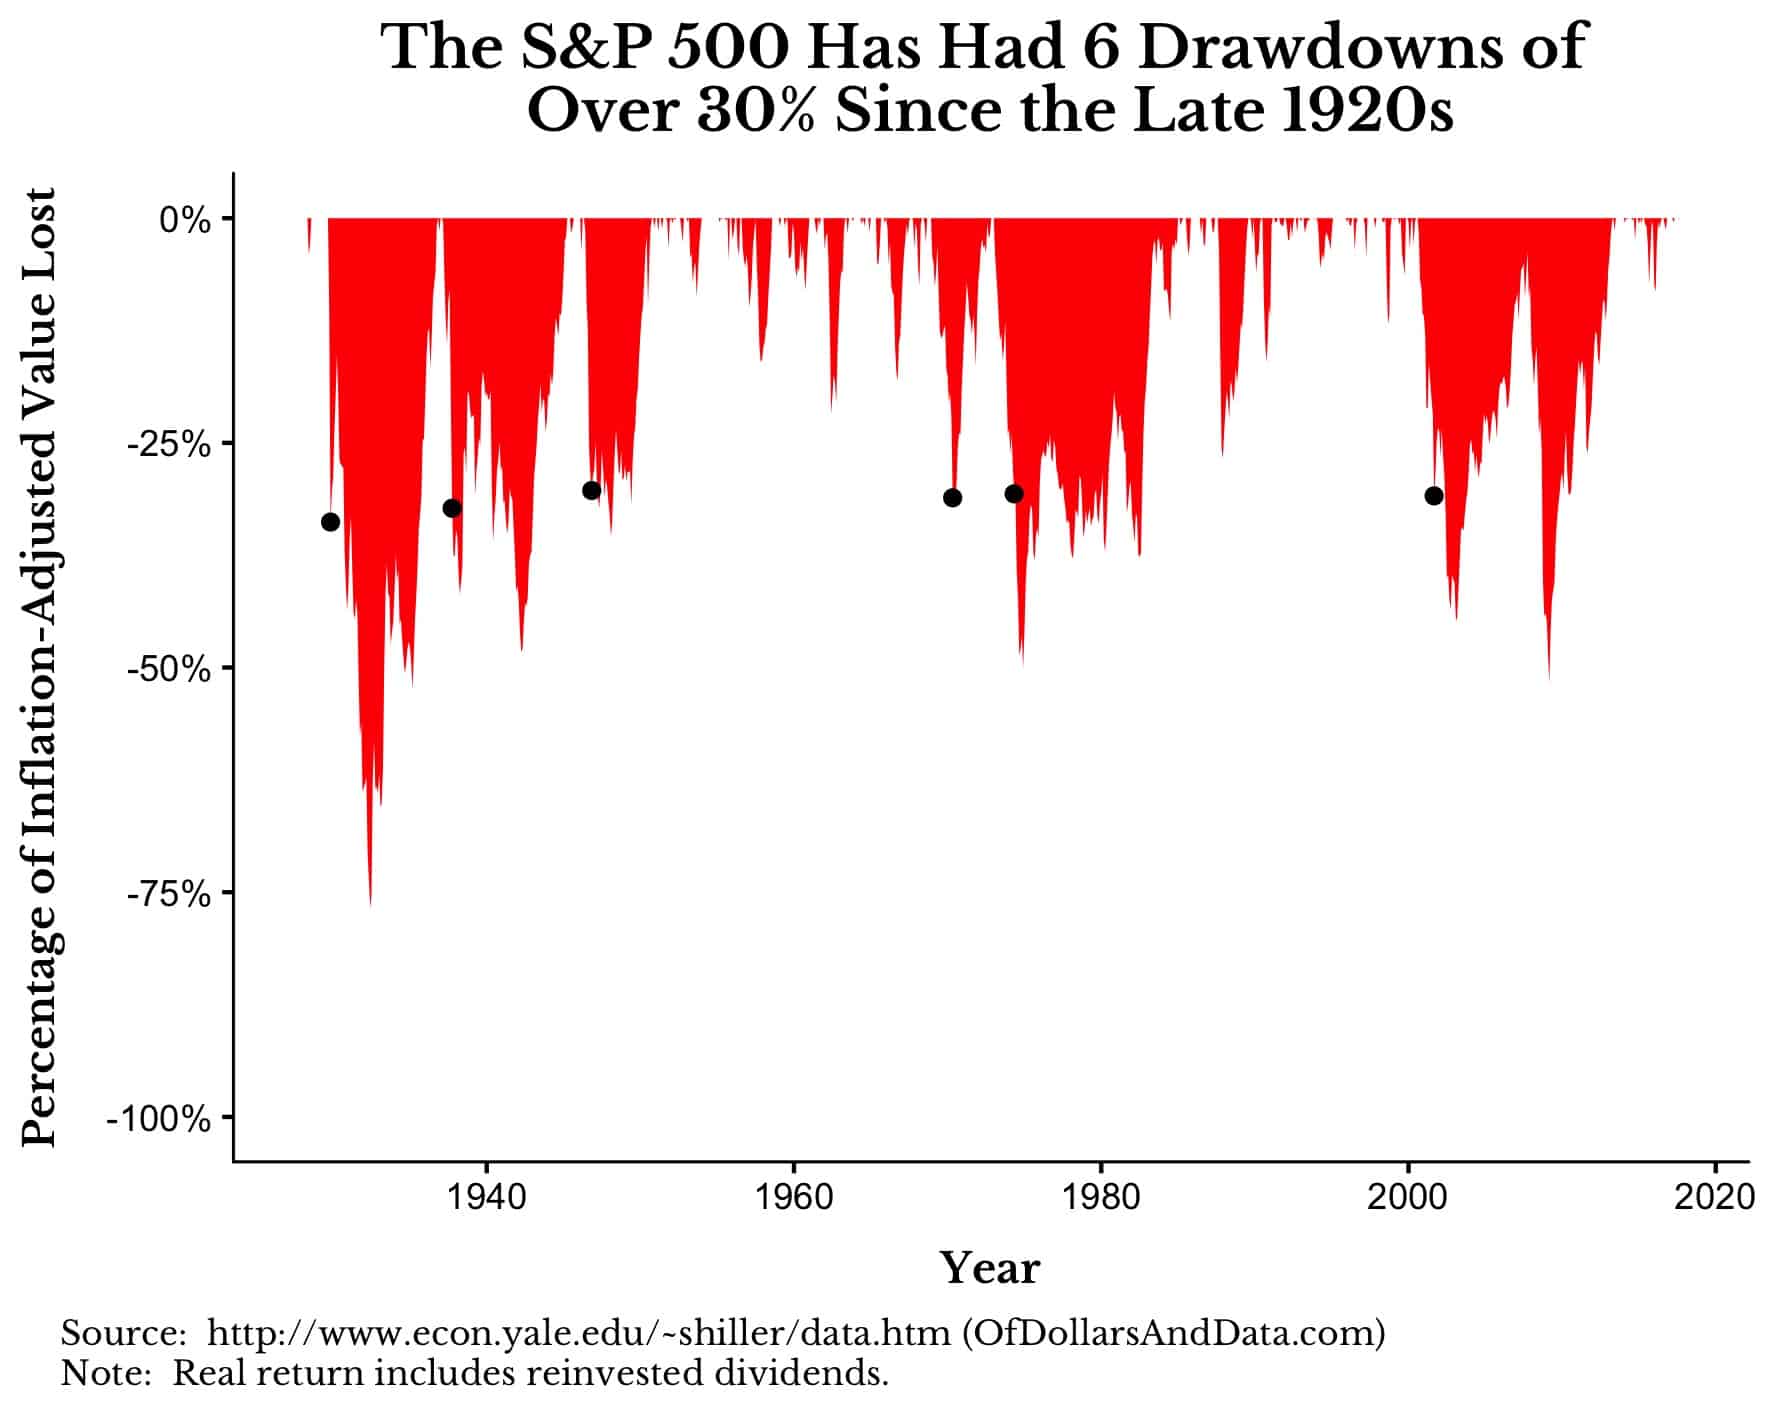 S&P 500 drawdowns since the 1920s